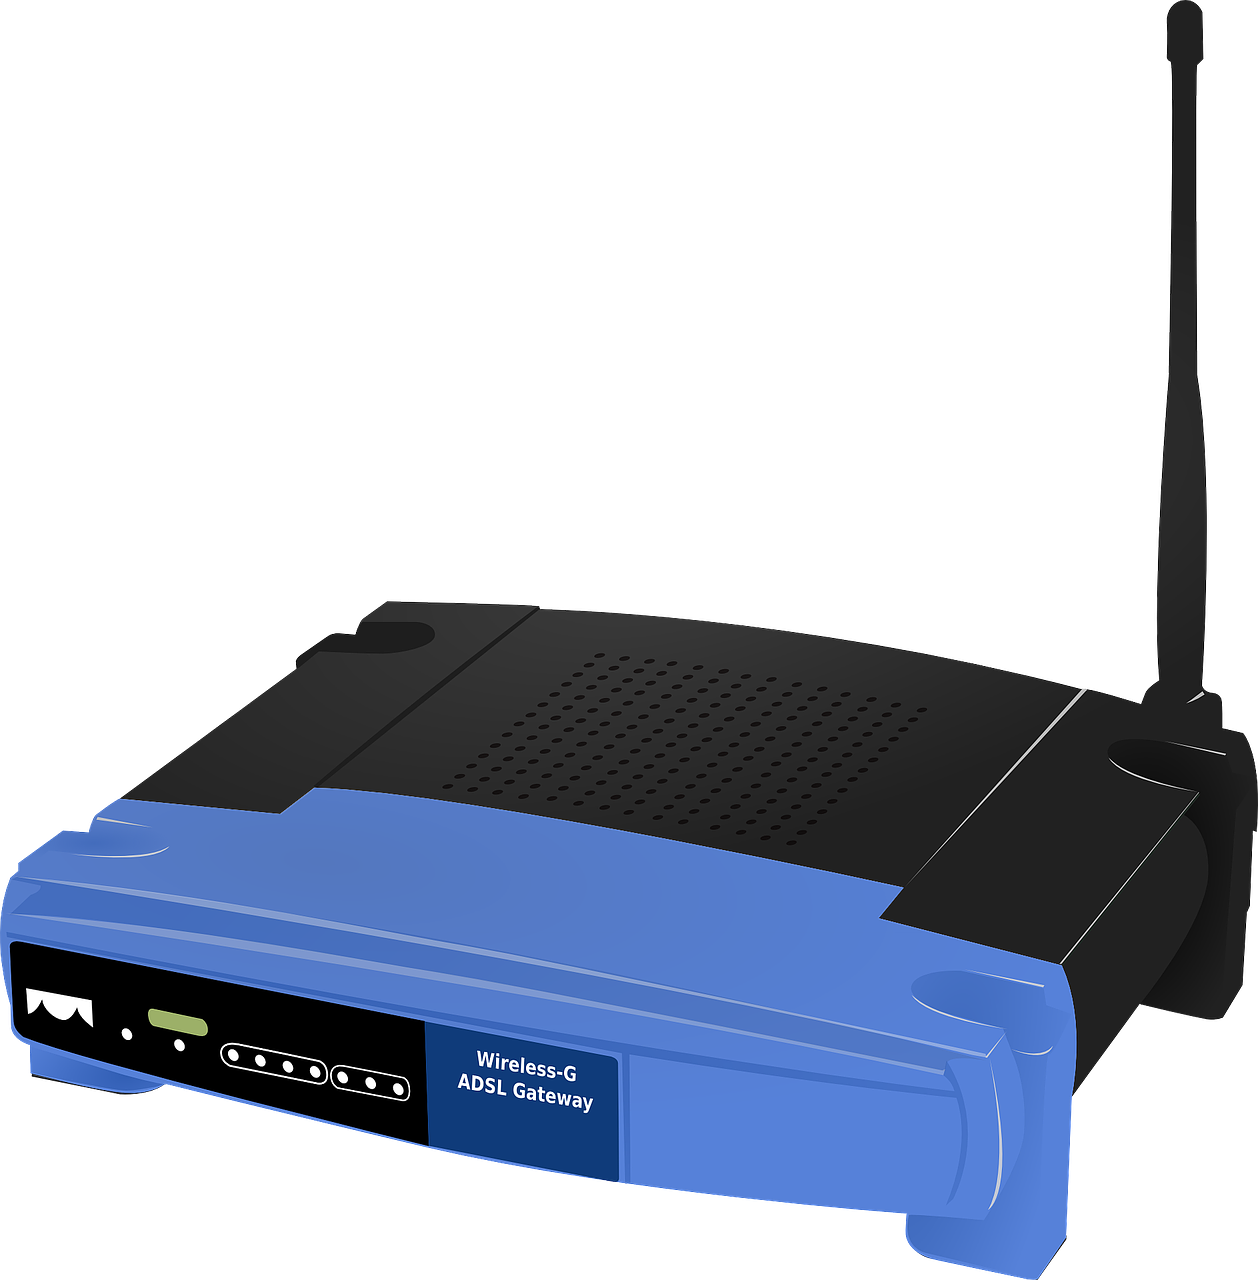 Wireless G A D S L Gateway Router PNG